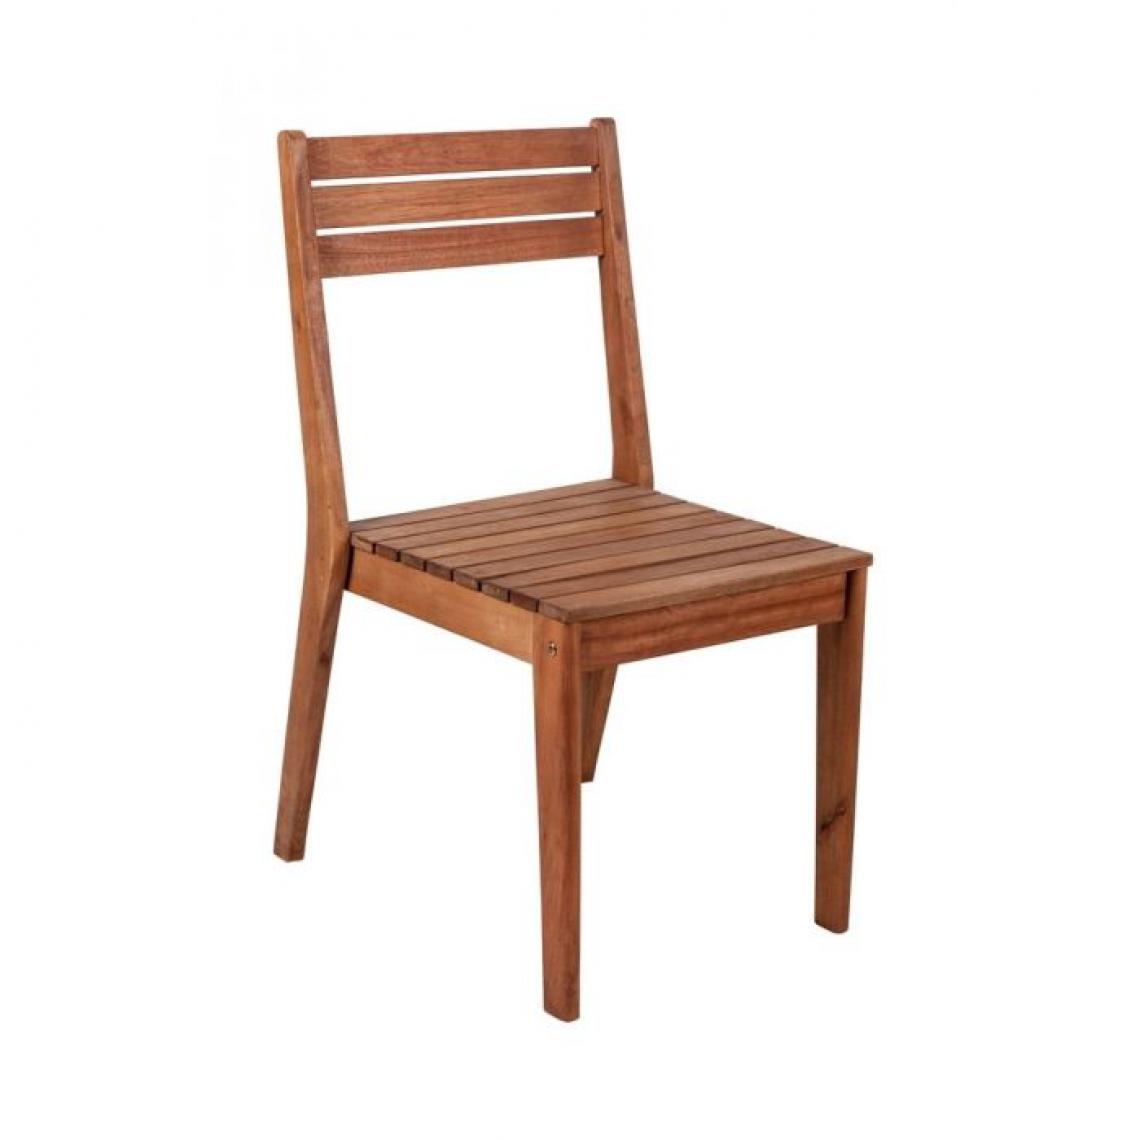 Alter - Chaise en bois d'eucalyptus Made in Italy, couleur marron, cm 47 x 60 xh 90 - Chaises